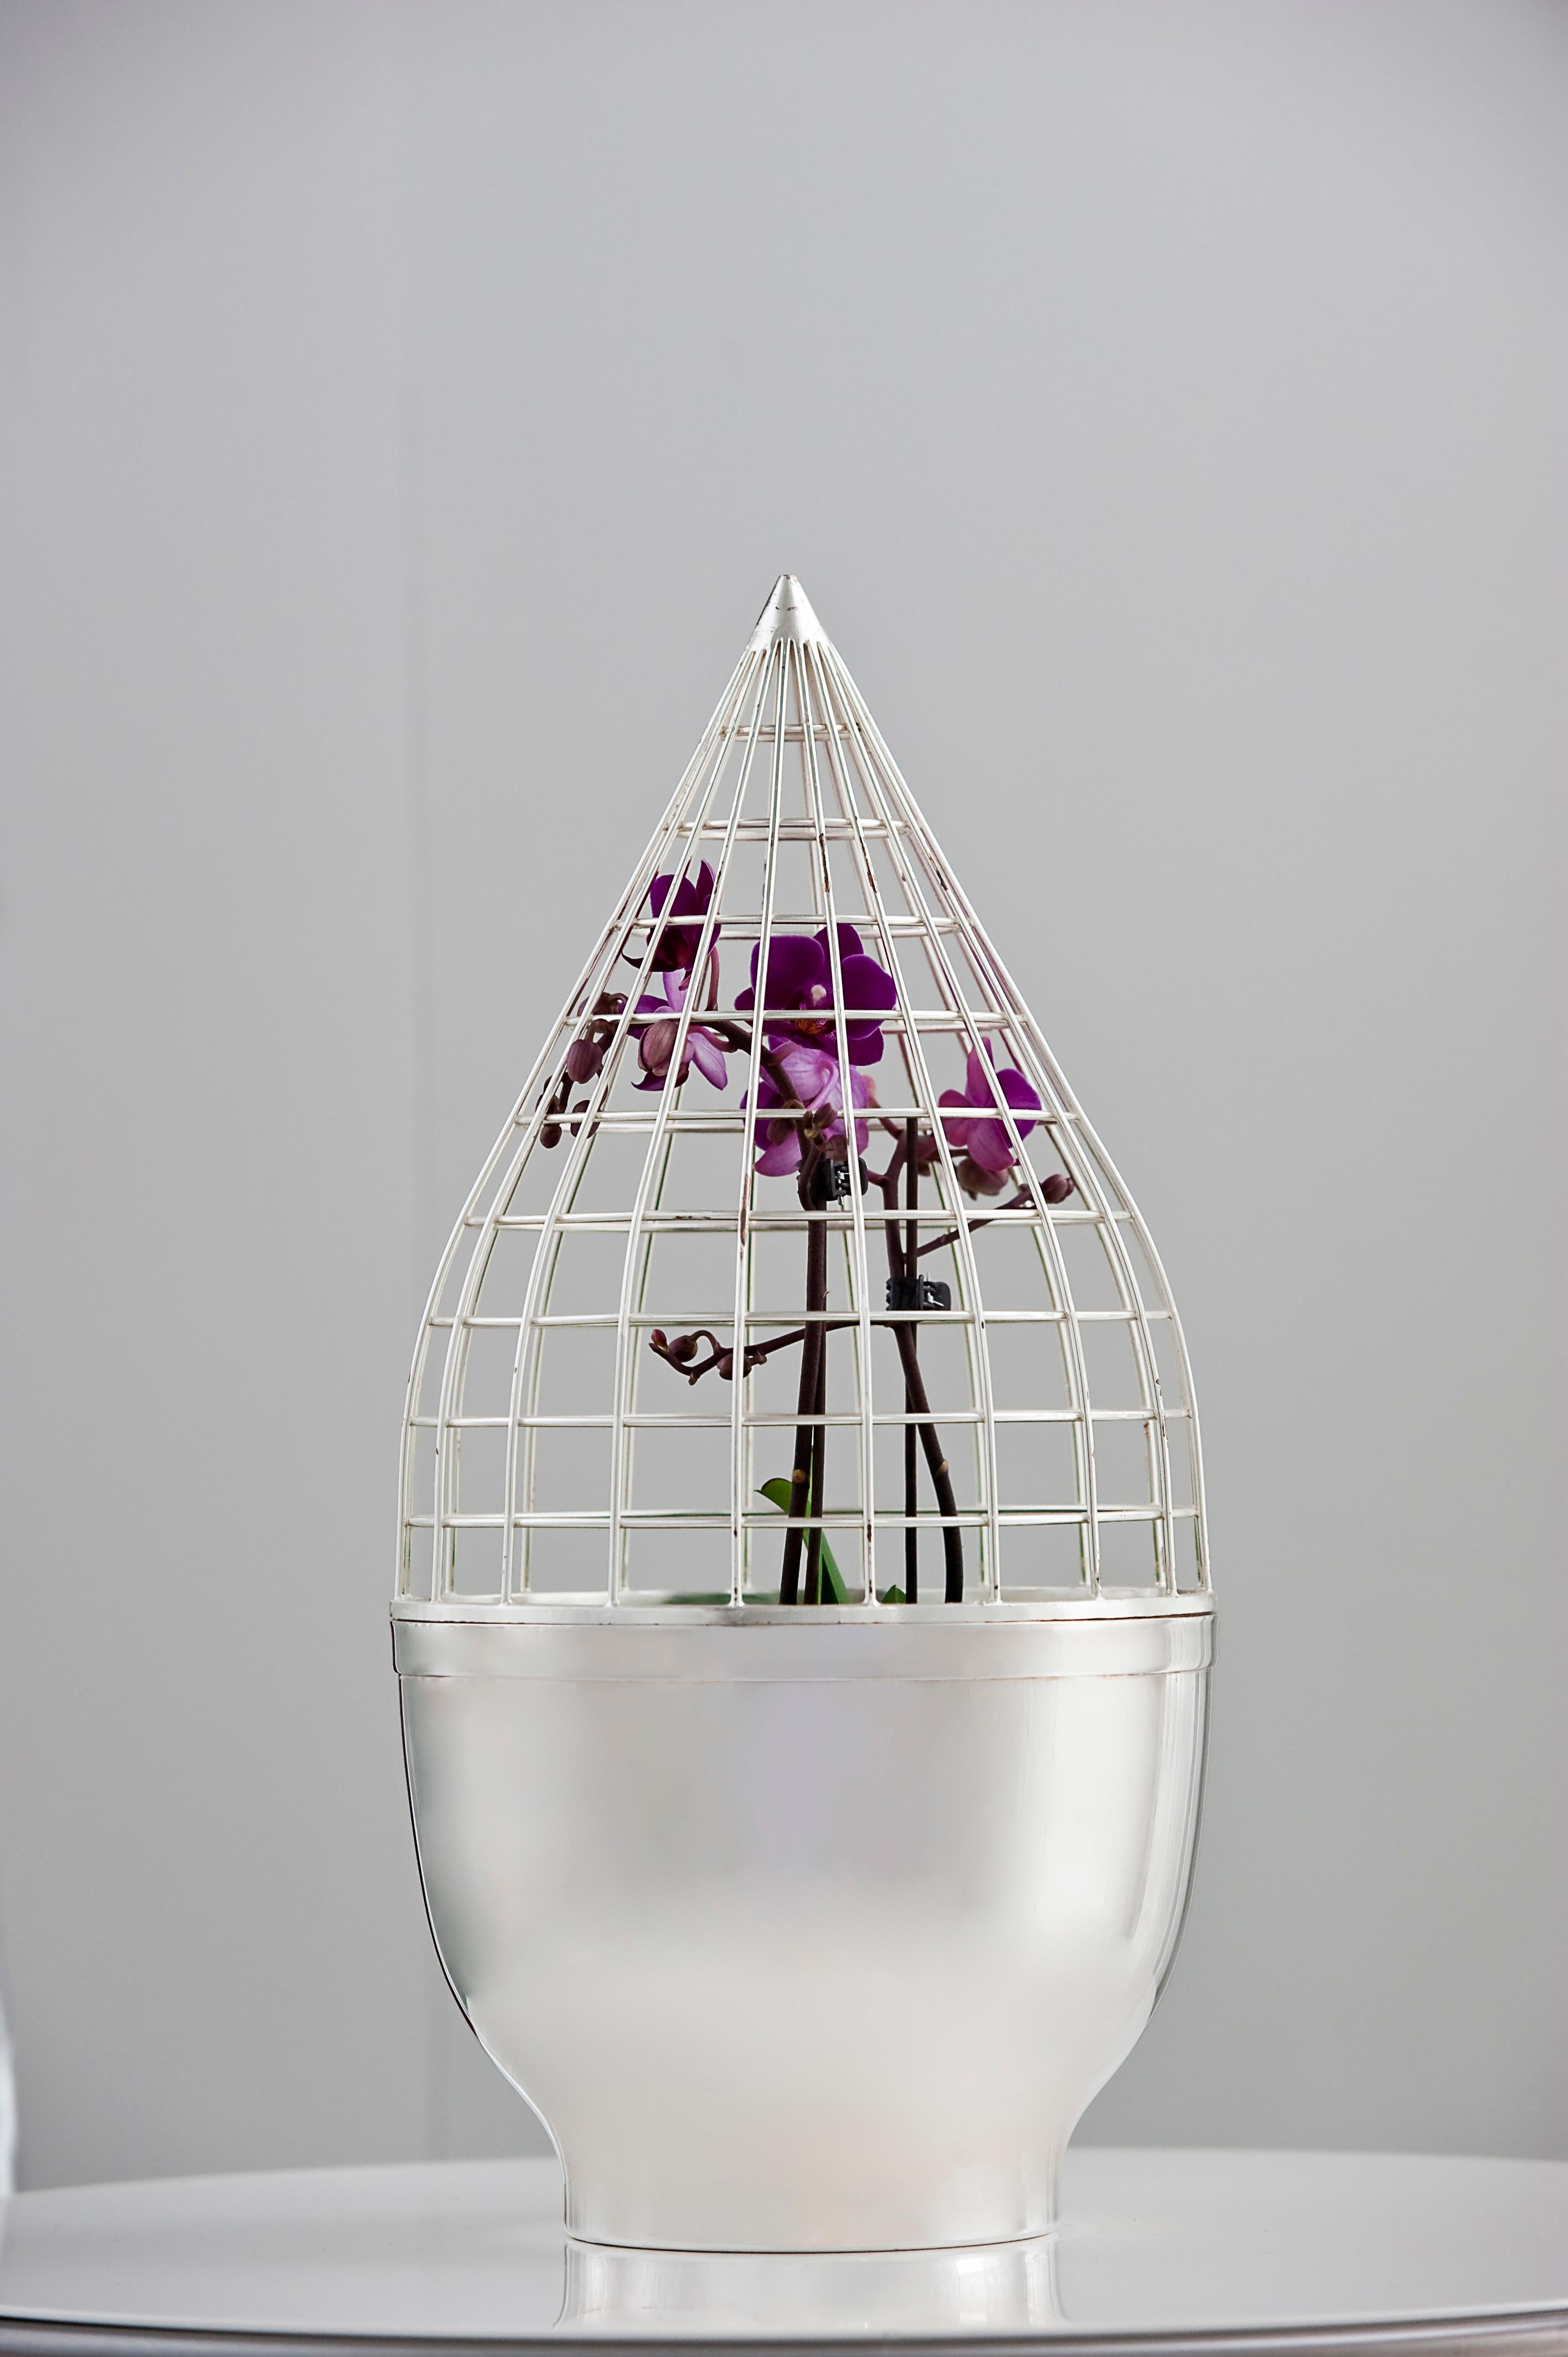 Hand-Crafted 21st Century Contemporary Handmade Silver Vessel/Centerpiece/Vase 